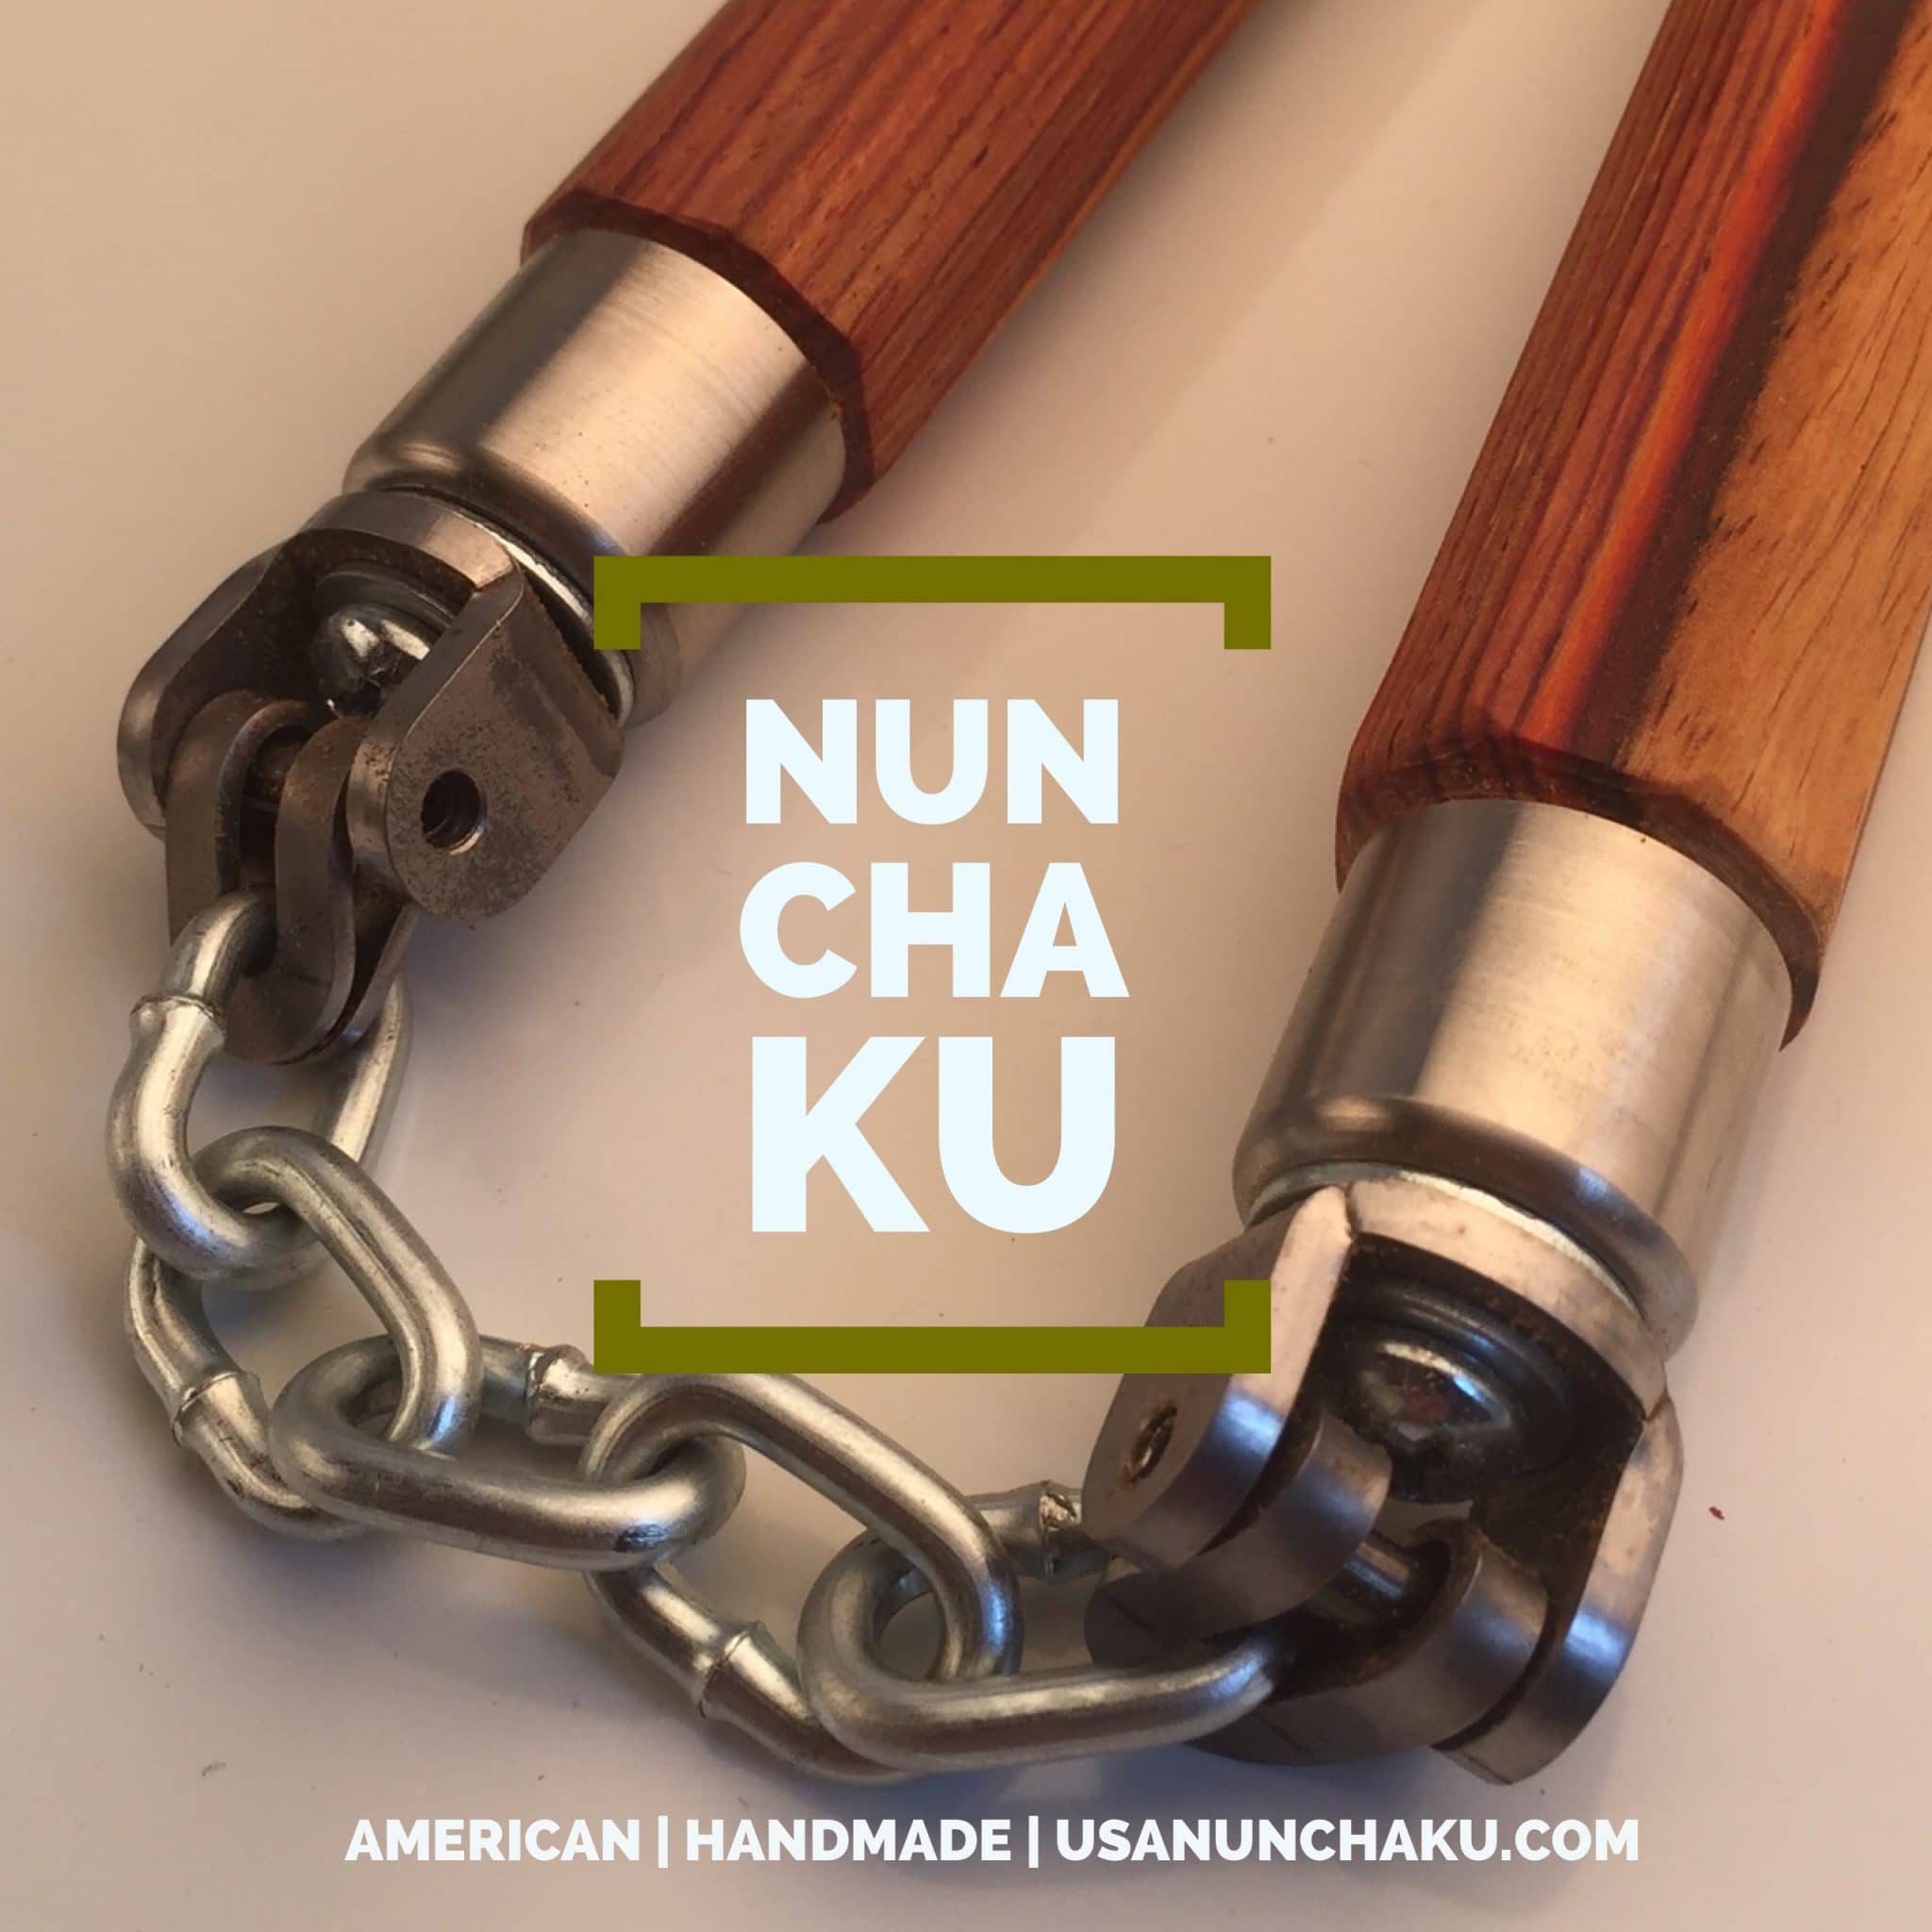 American Handmade Nunchaku